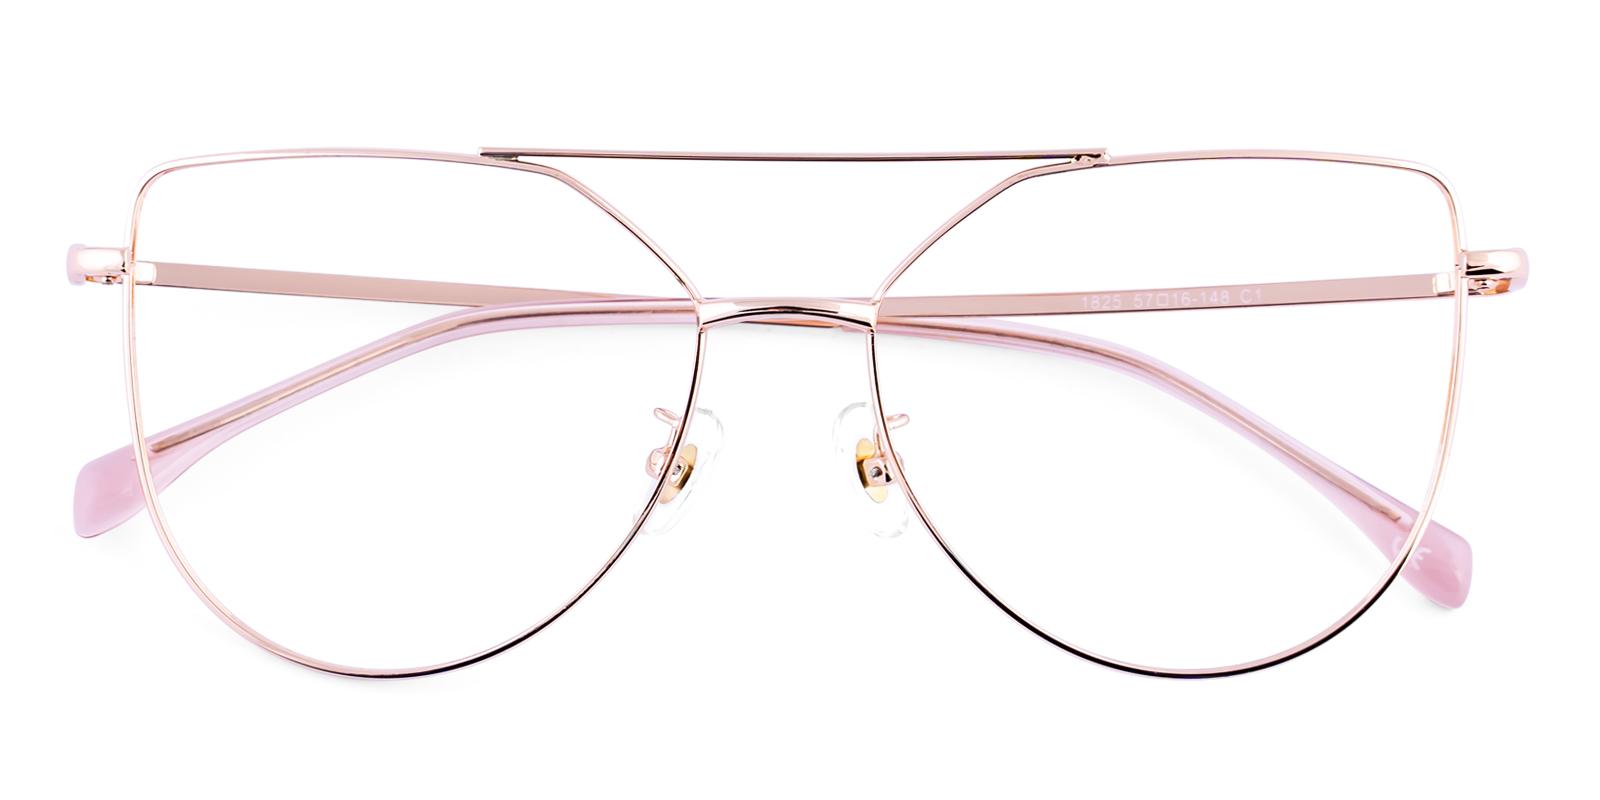 Opoit Rosegold Metal Eyeglasses , NosePads Frames from ABBE Glasses